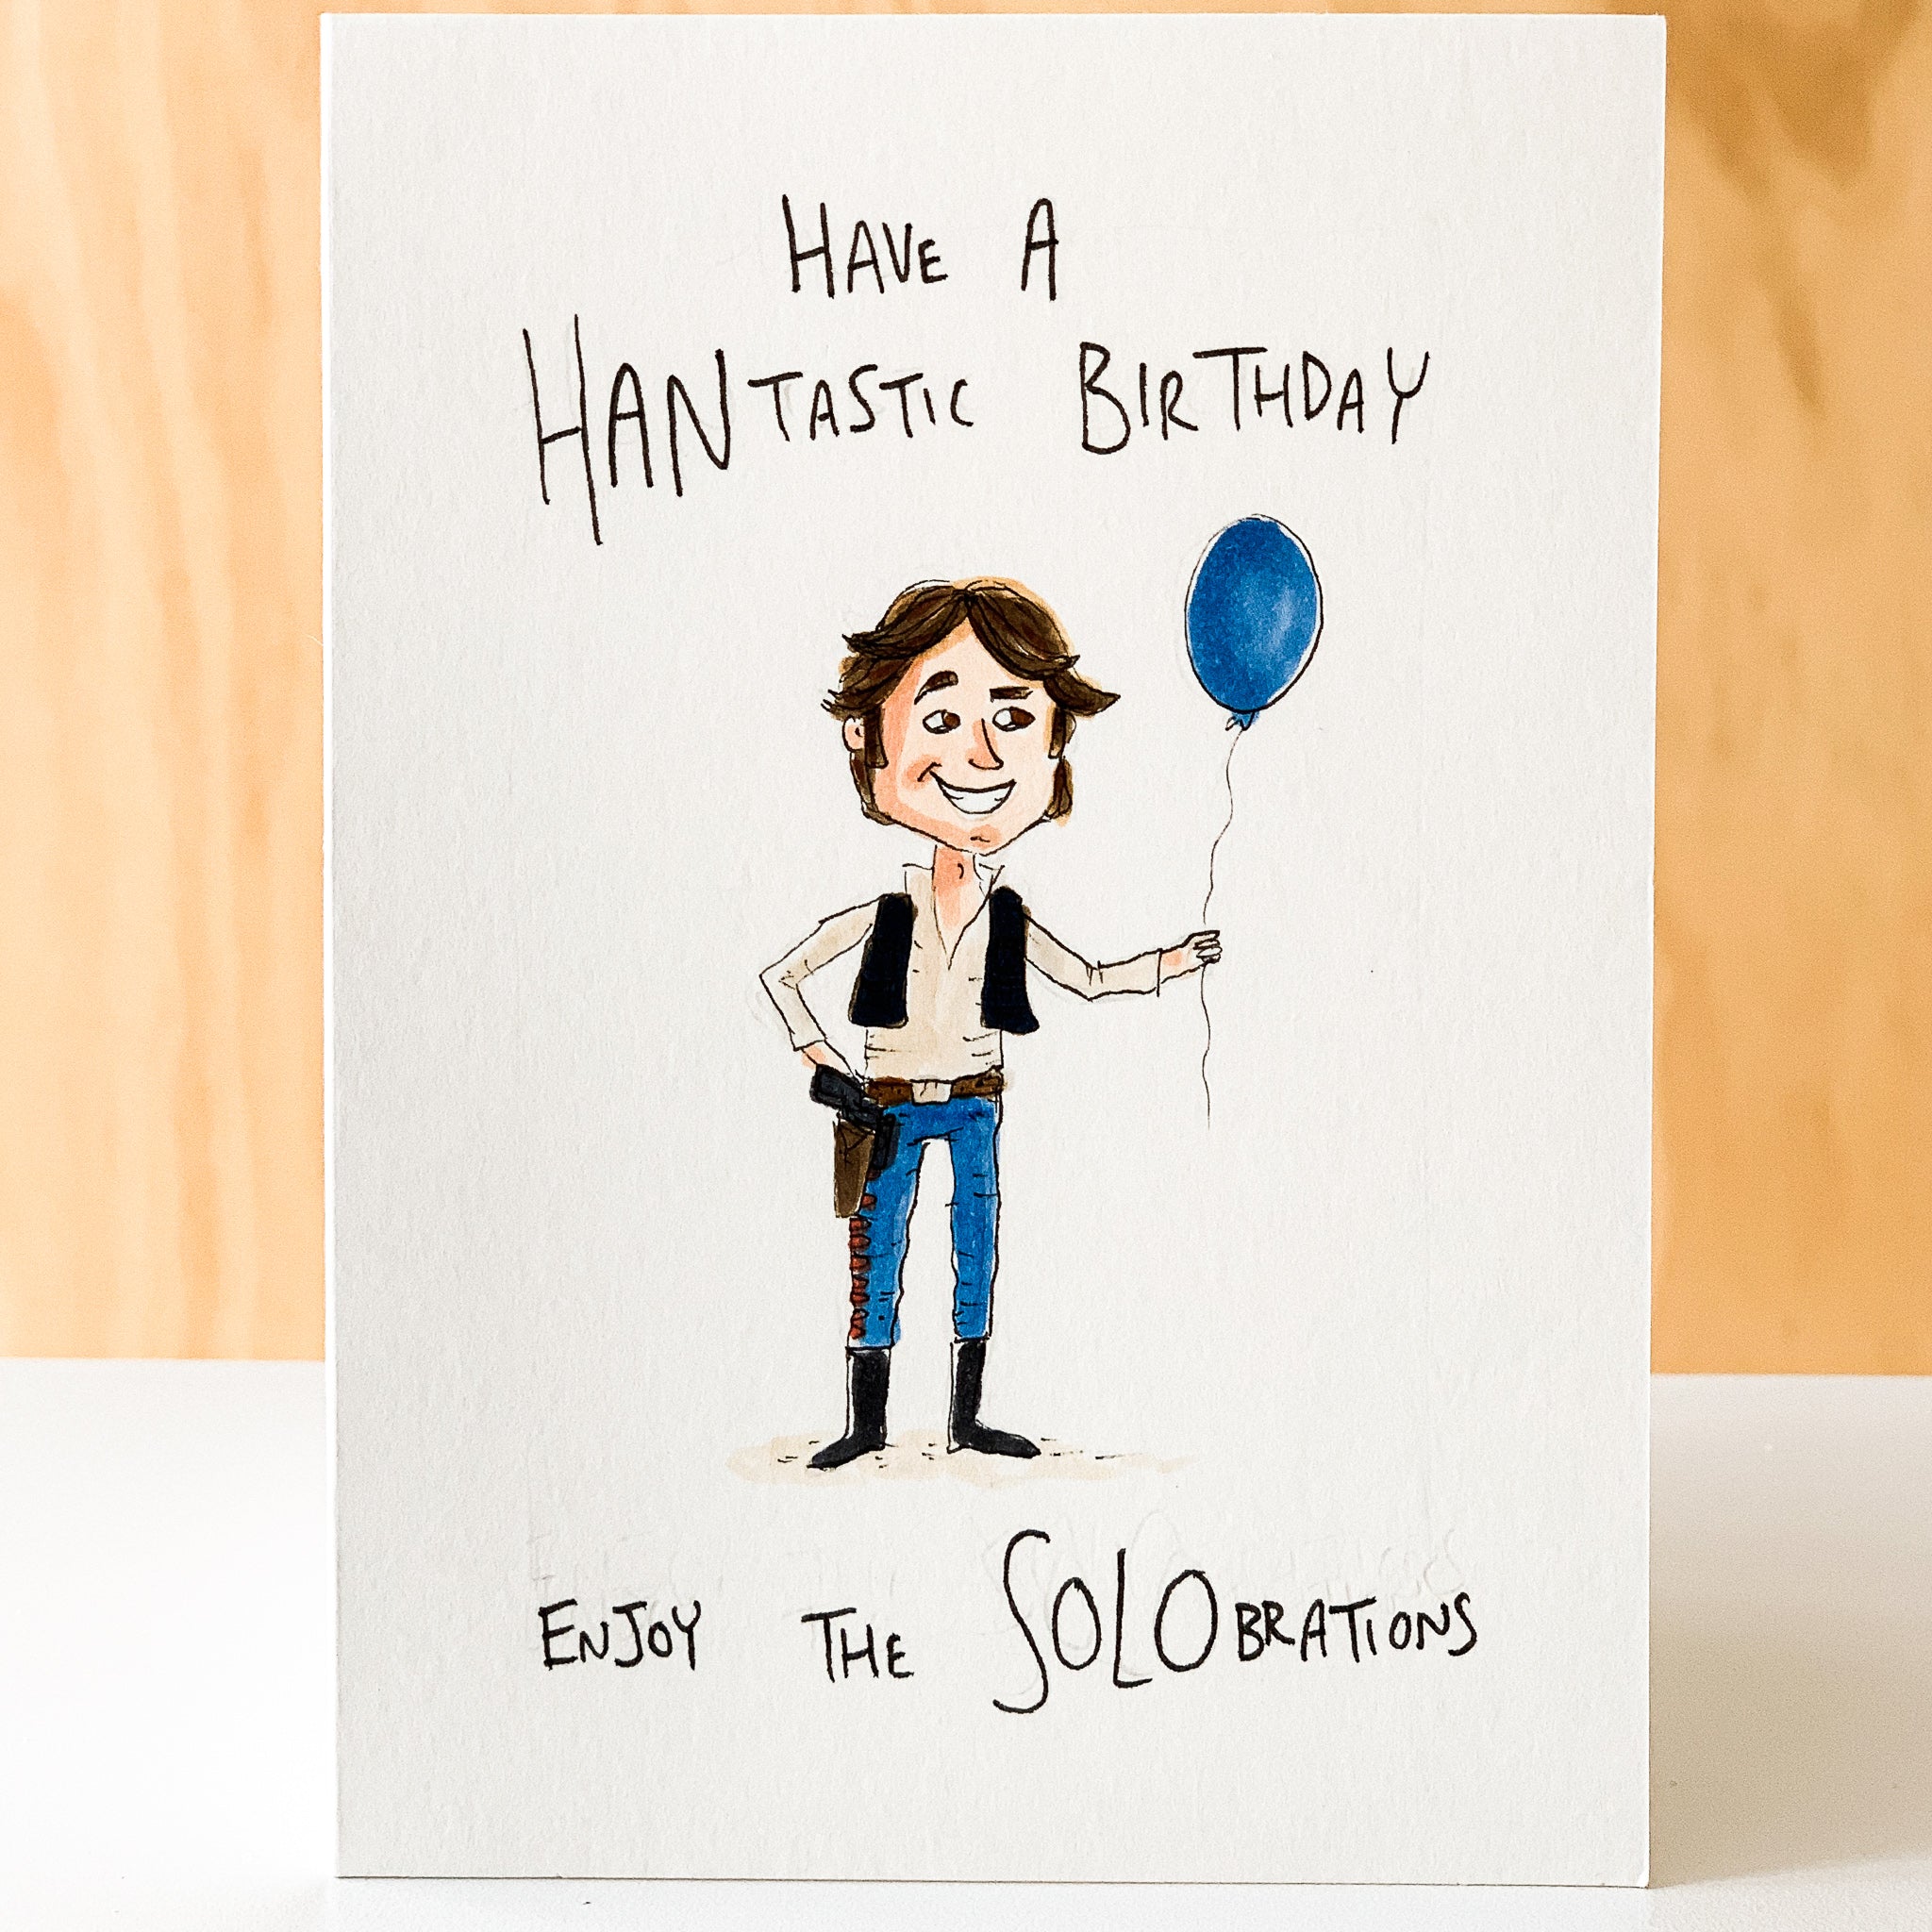 Have a Hantastic Birthday, Enjoy The Solobrations - Well Drawn